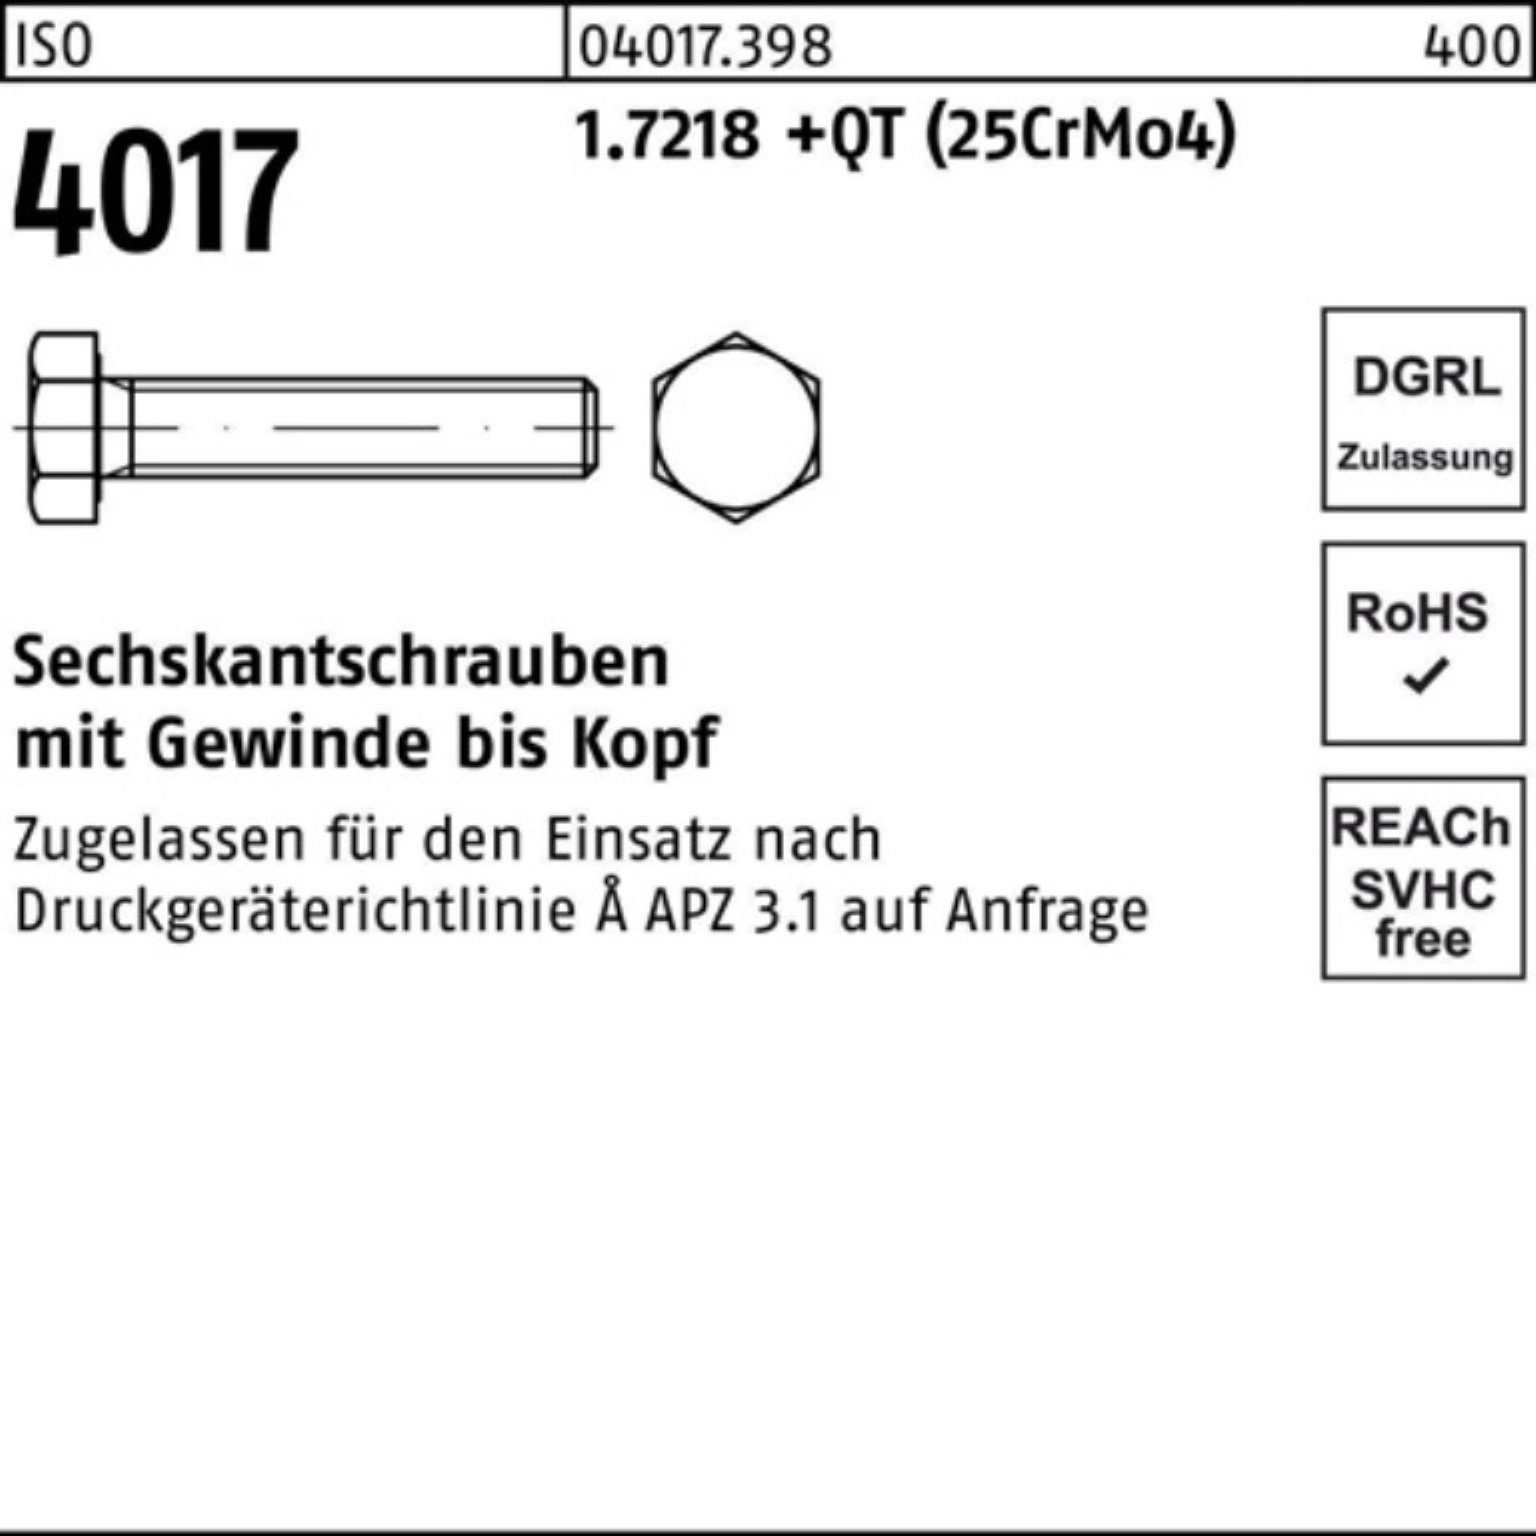 ISO 100er 65 Sechskantschraube M16x Bufab (25CrMo4) +QT VG 1.7218 Pack 4017 Sechskantschraube